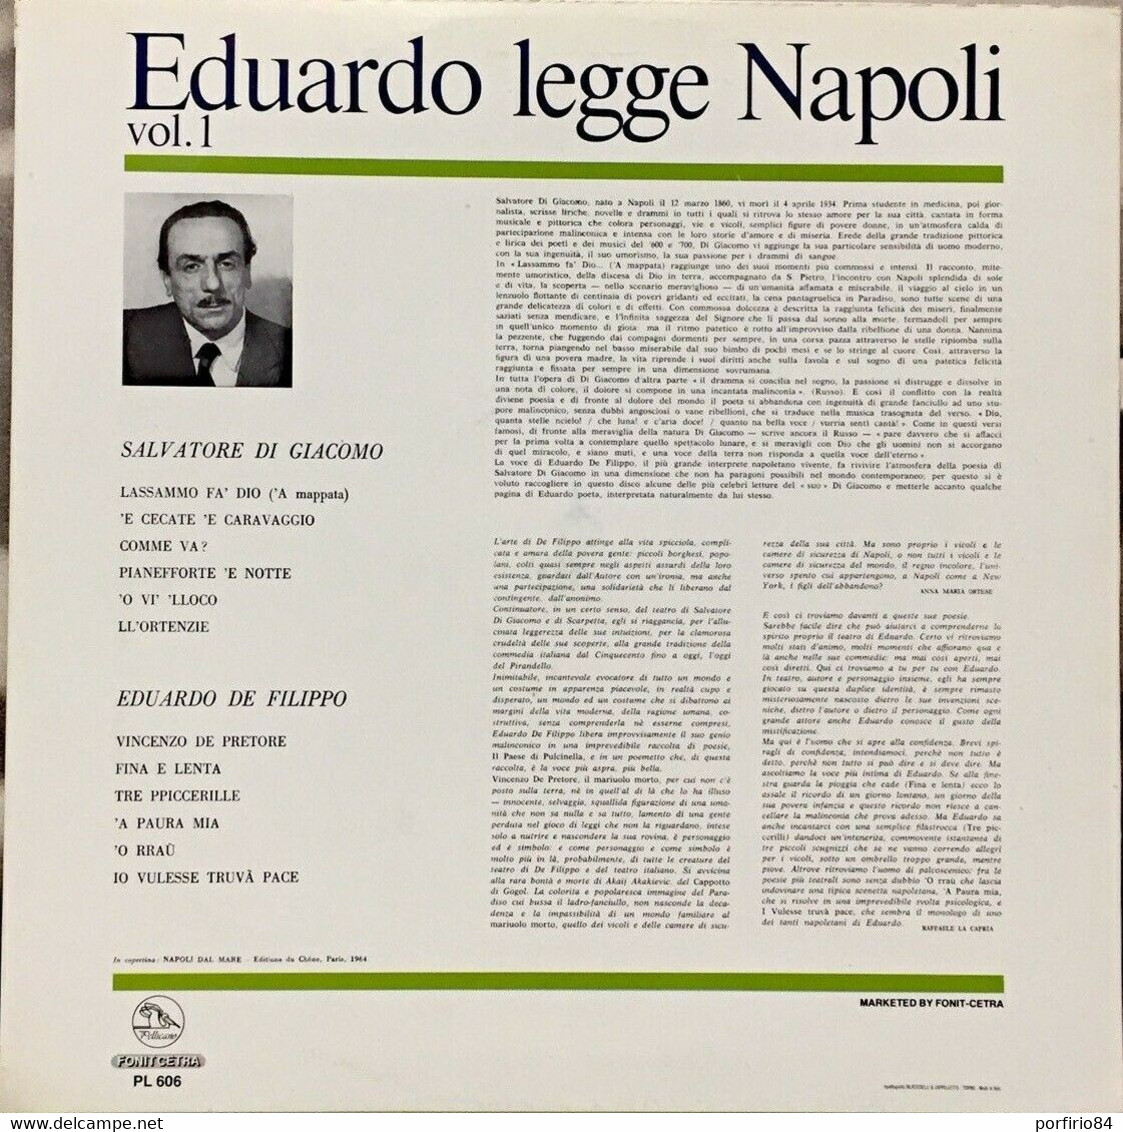 EDUARDO DE FILIPPO RARO LP - EDUARDO LEGGE NAPOLI VOL. 1 SALVATORE DI GIACOMO - Altri - Musica Italiana